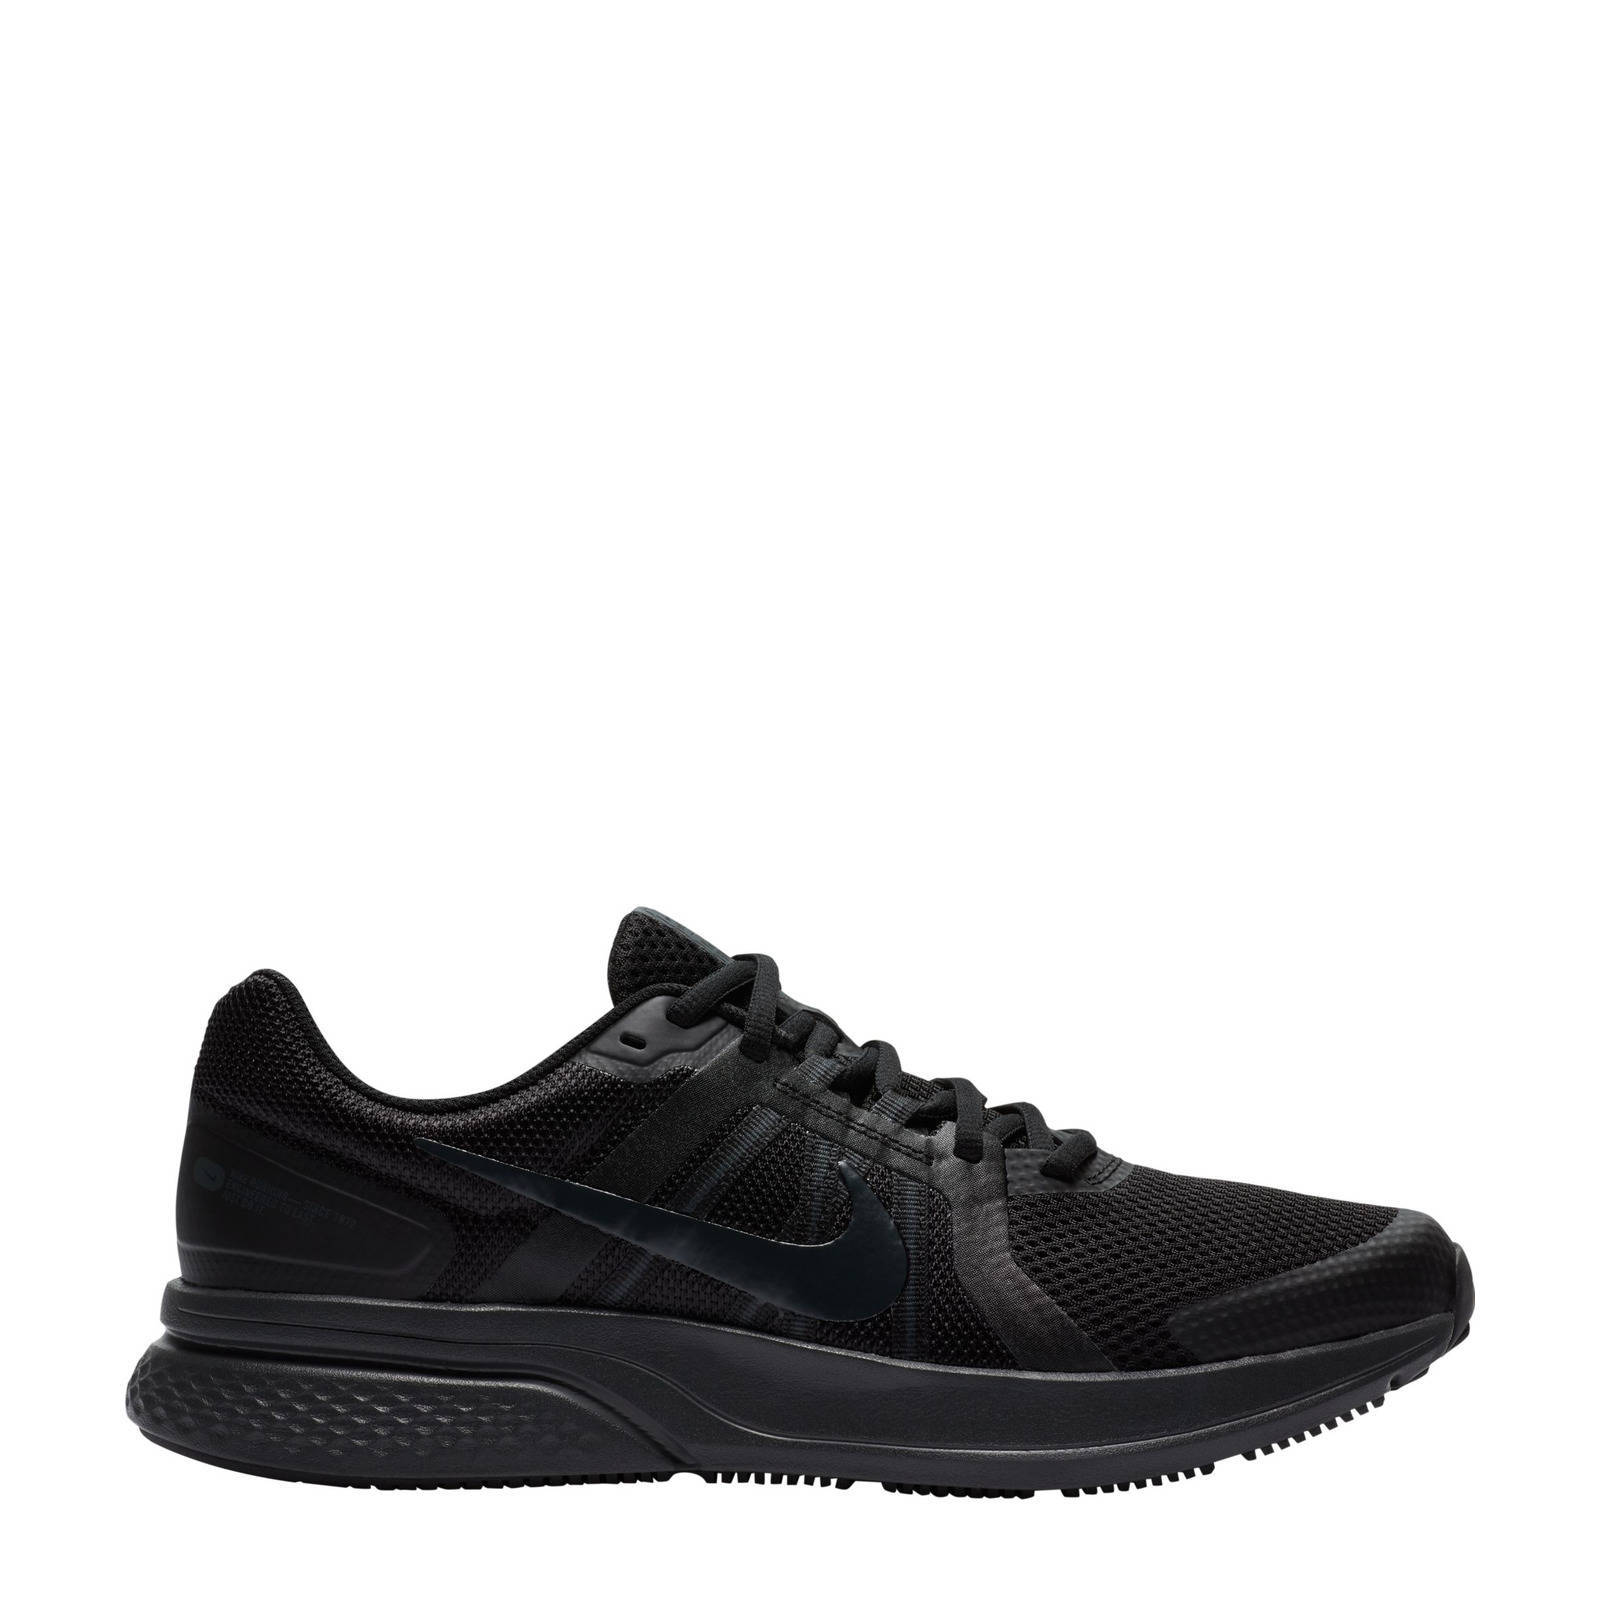 Nike Run Swift 2 hardloopschoenen zwart/donkergrijs online kopen